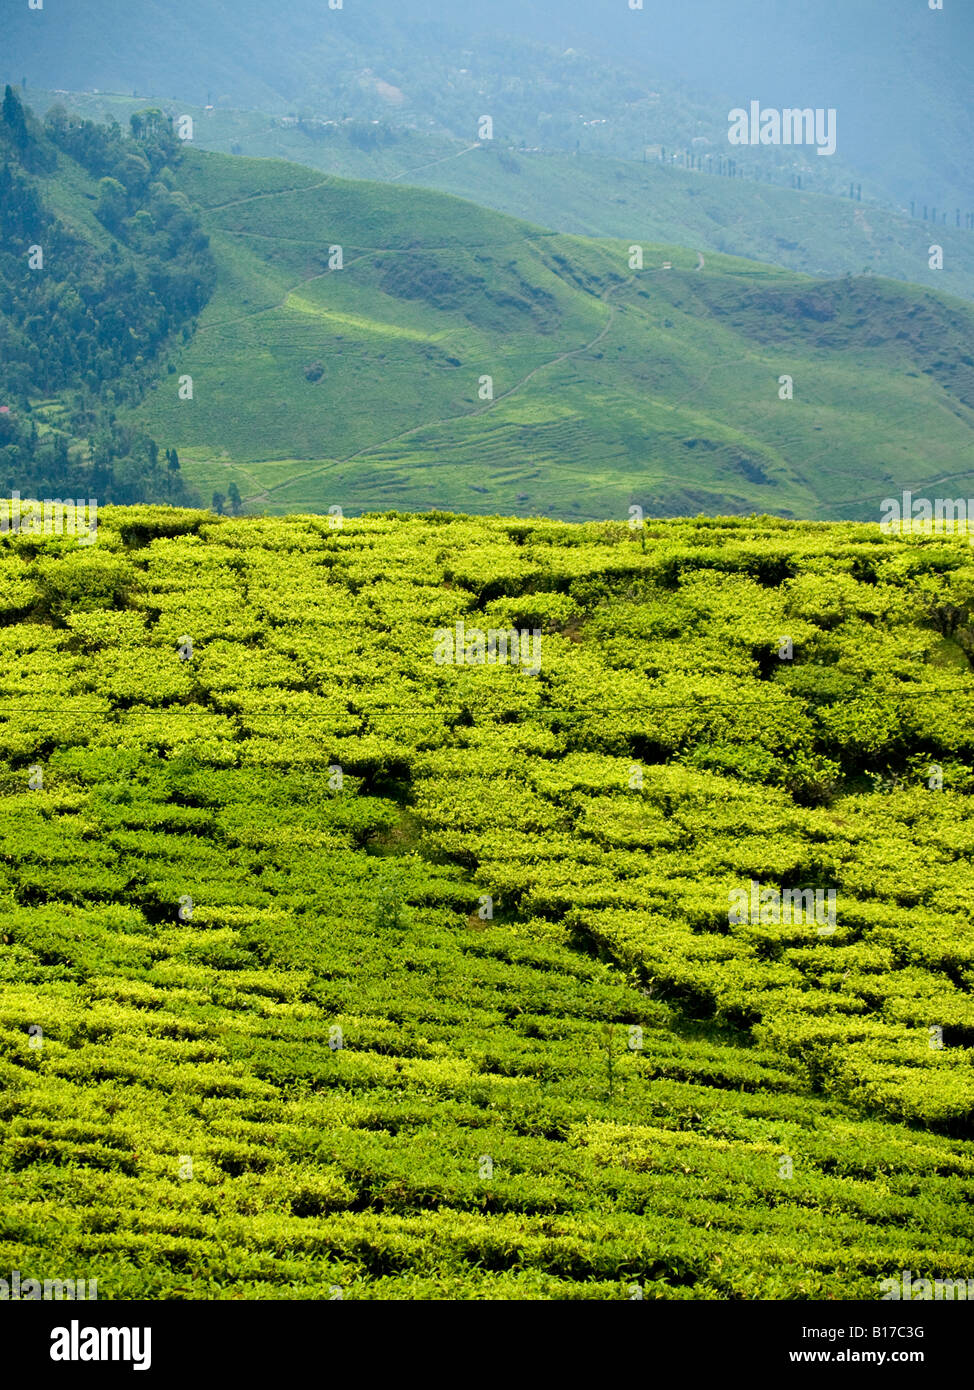 the famous tea plants of Darjeeling in afternoon sunlight Stock Photo